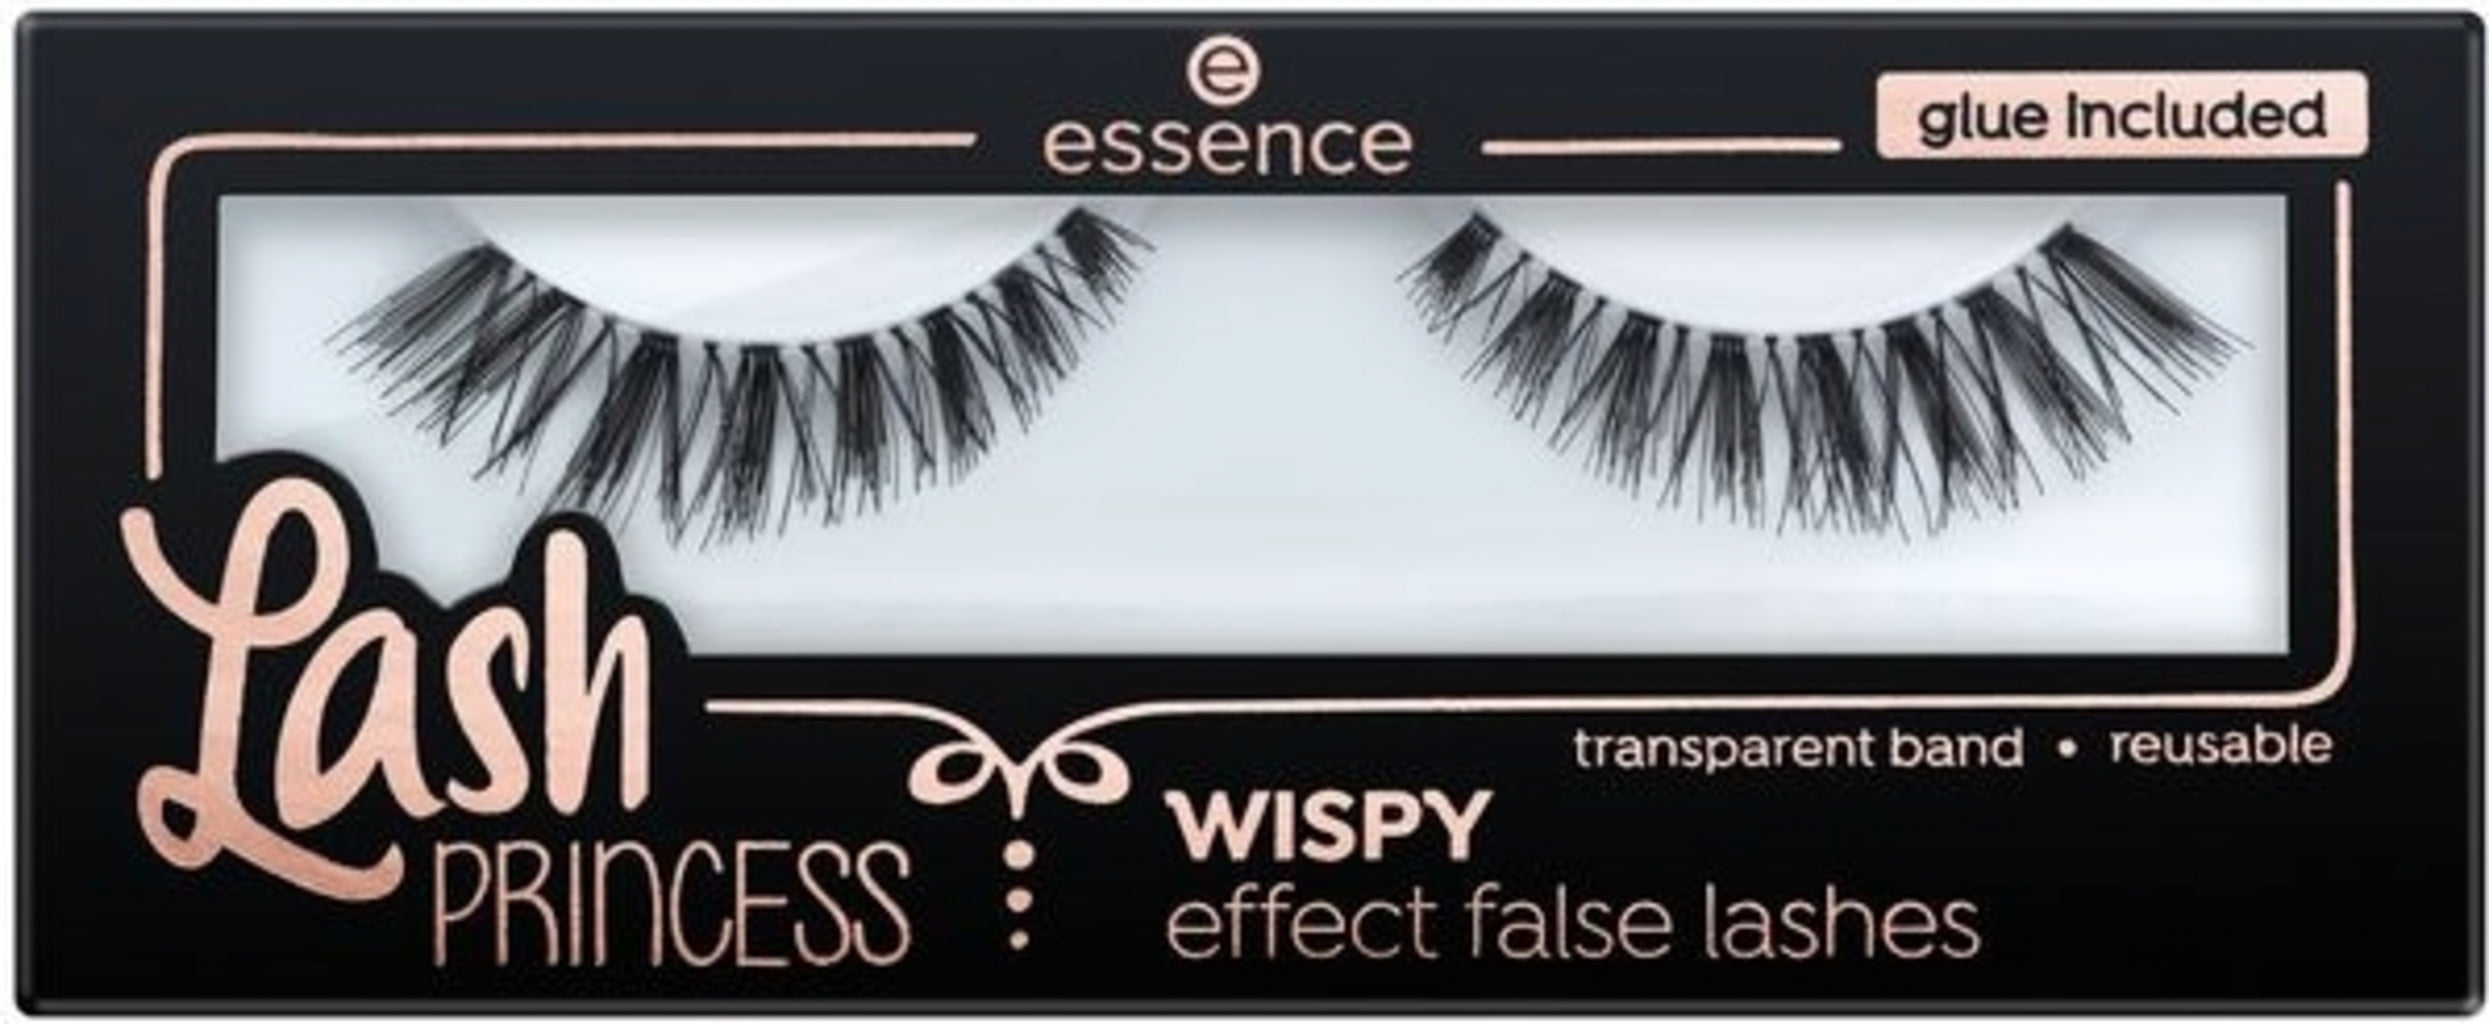 essence Lash Princess WISPY Effect False Lashes, 1 set - oh feliz